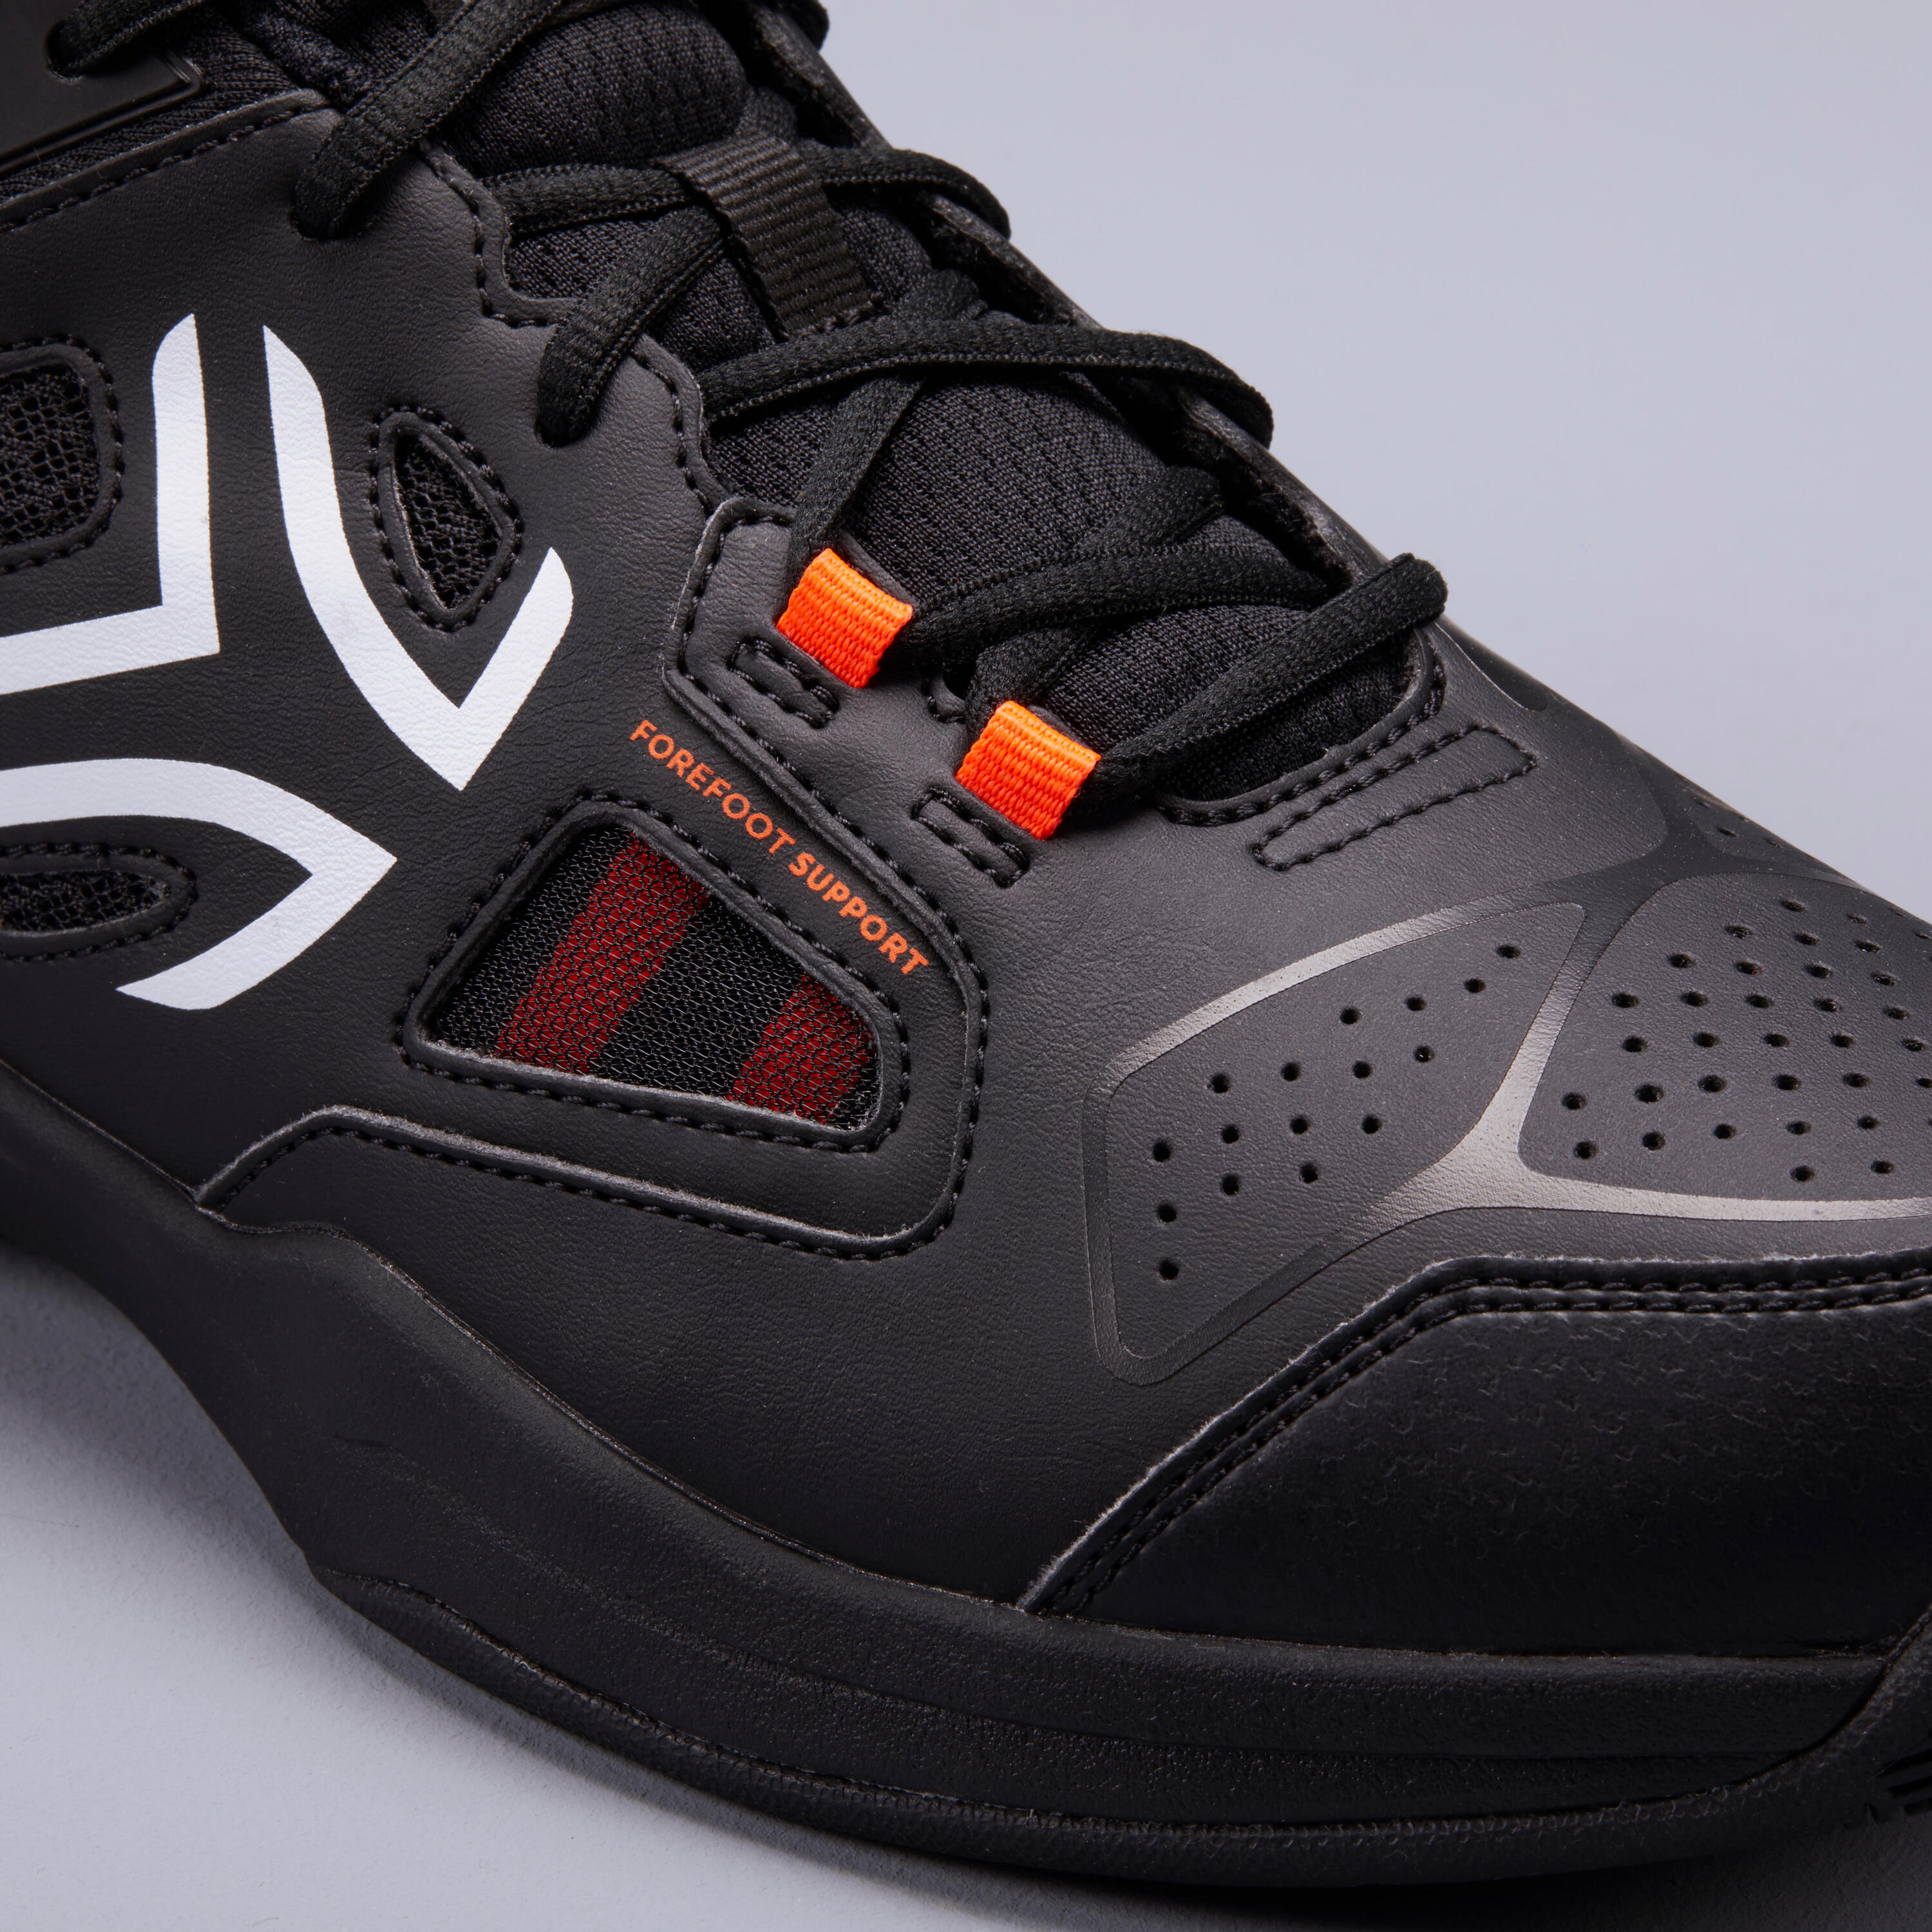 TS500 Multicourt Tennis Shoes - Black/Orange 8/8